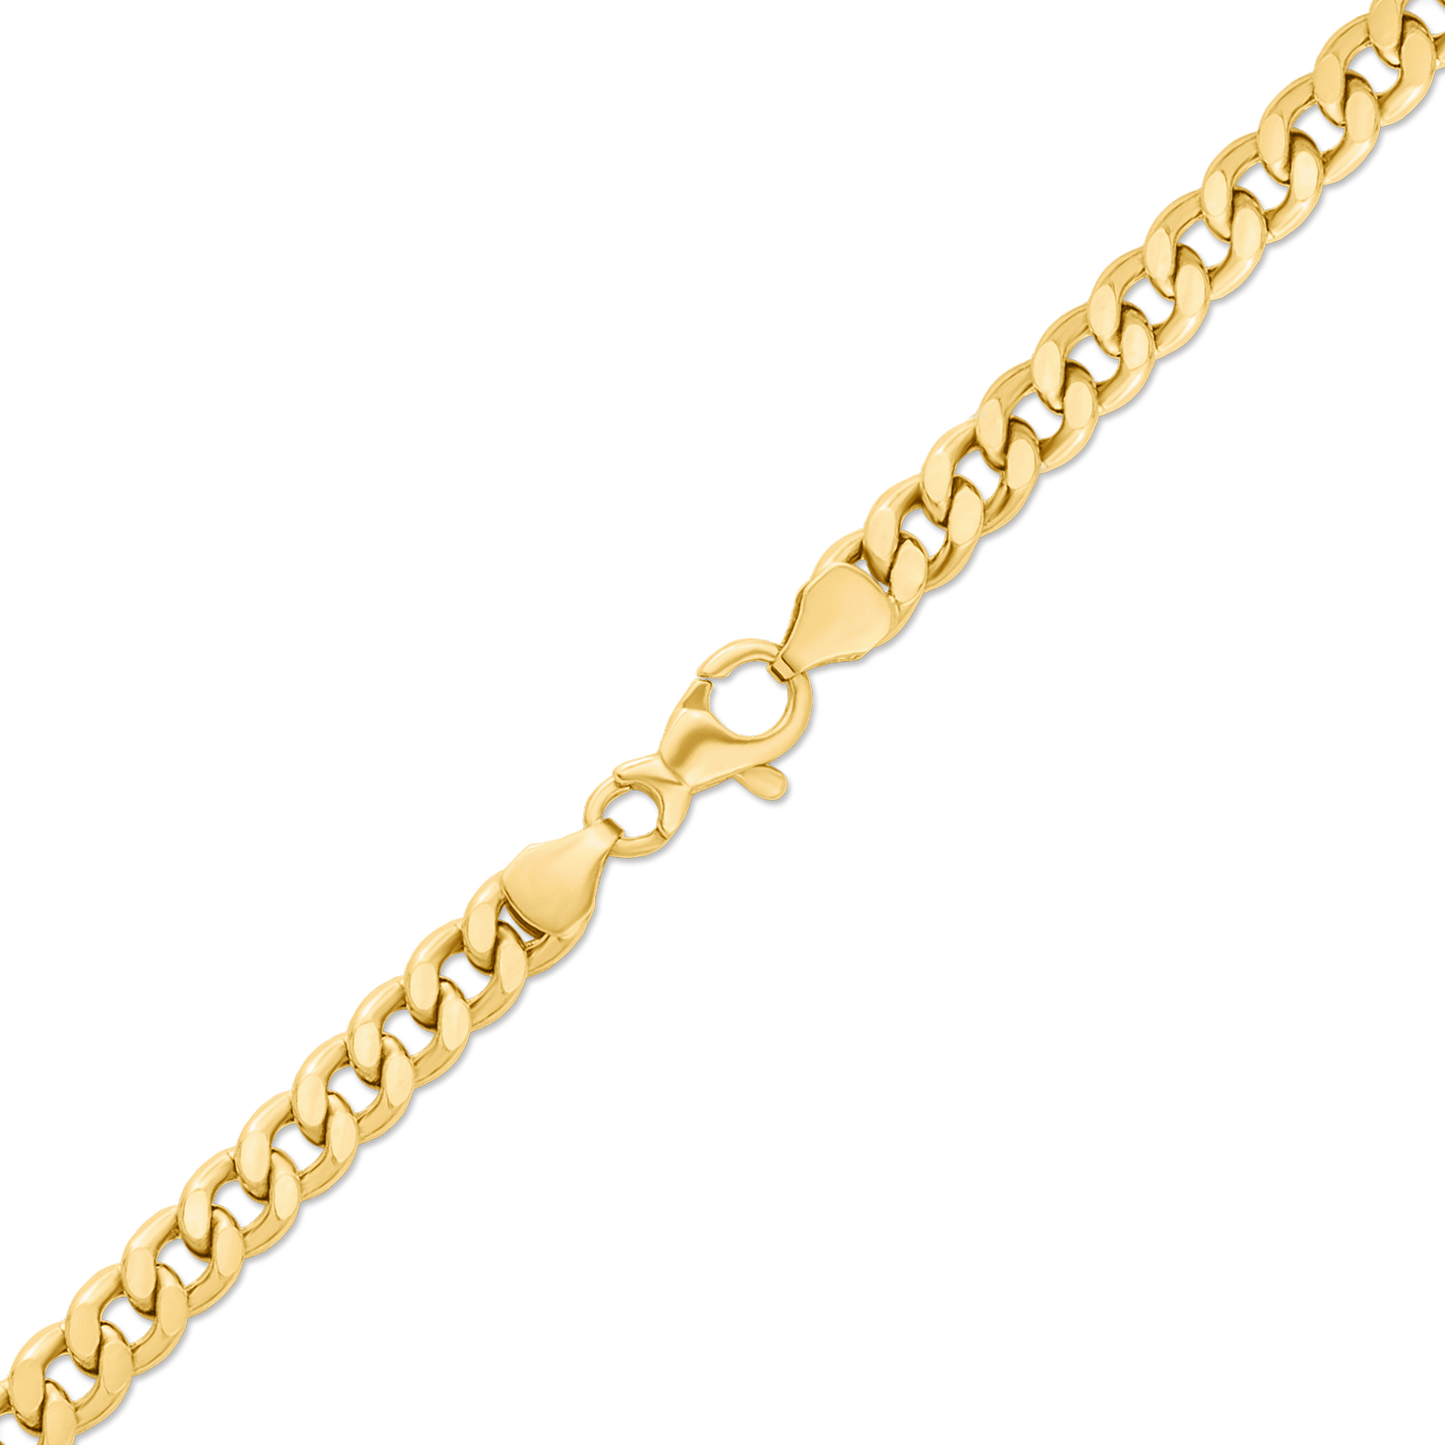 18K Yellow Gold Cuban Link Chain